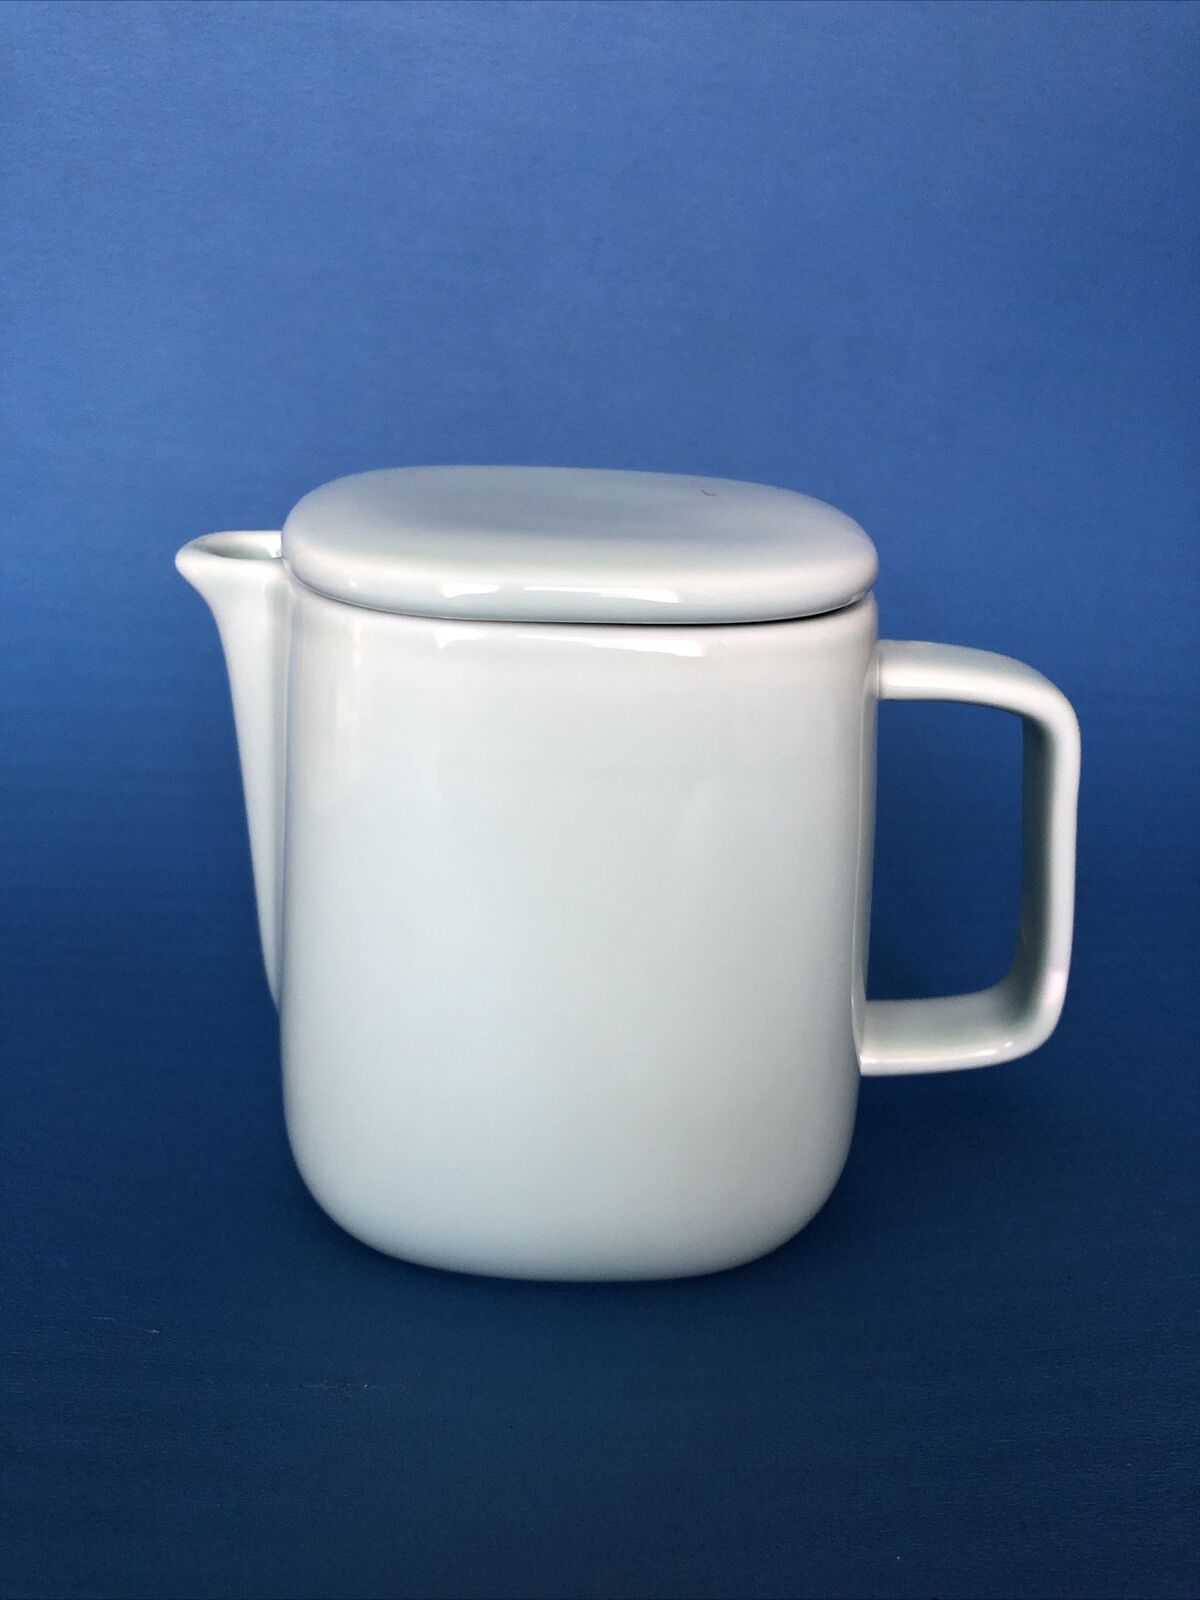 NEW 2017 ALESSI For DELTA Celadon Ceramic Teapot by Kristiina Lassus